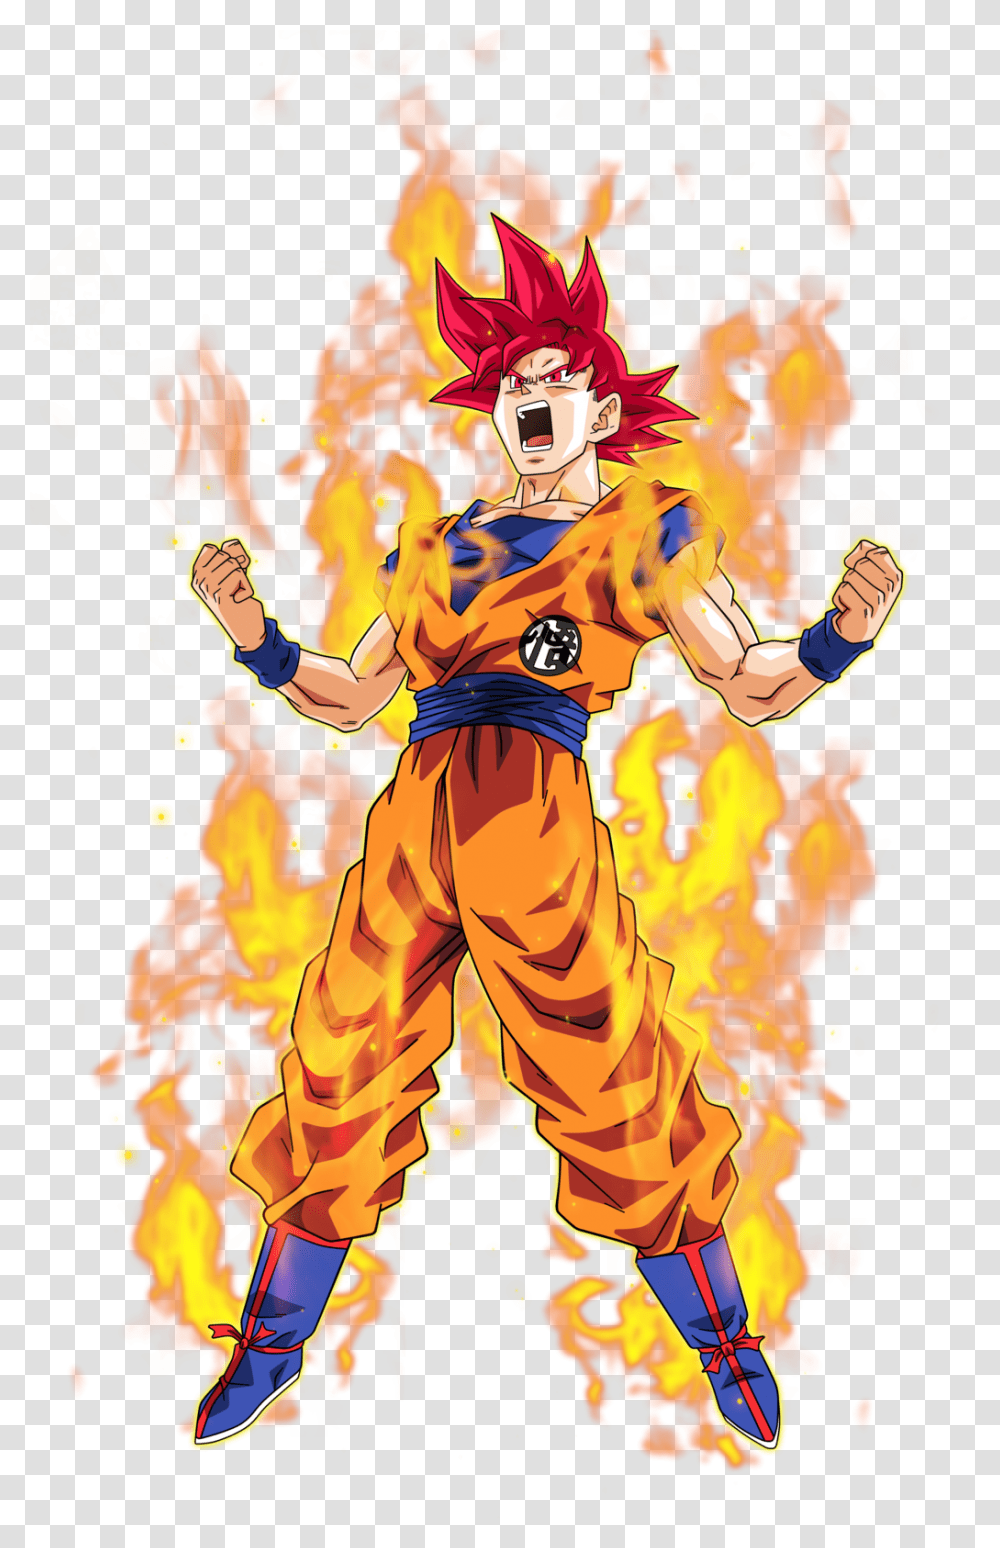 Goku Super Saiyan God Pics Dragon Ball Goku Ssj God, Fire, Person Transpare...